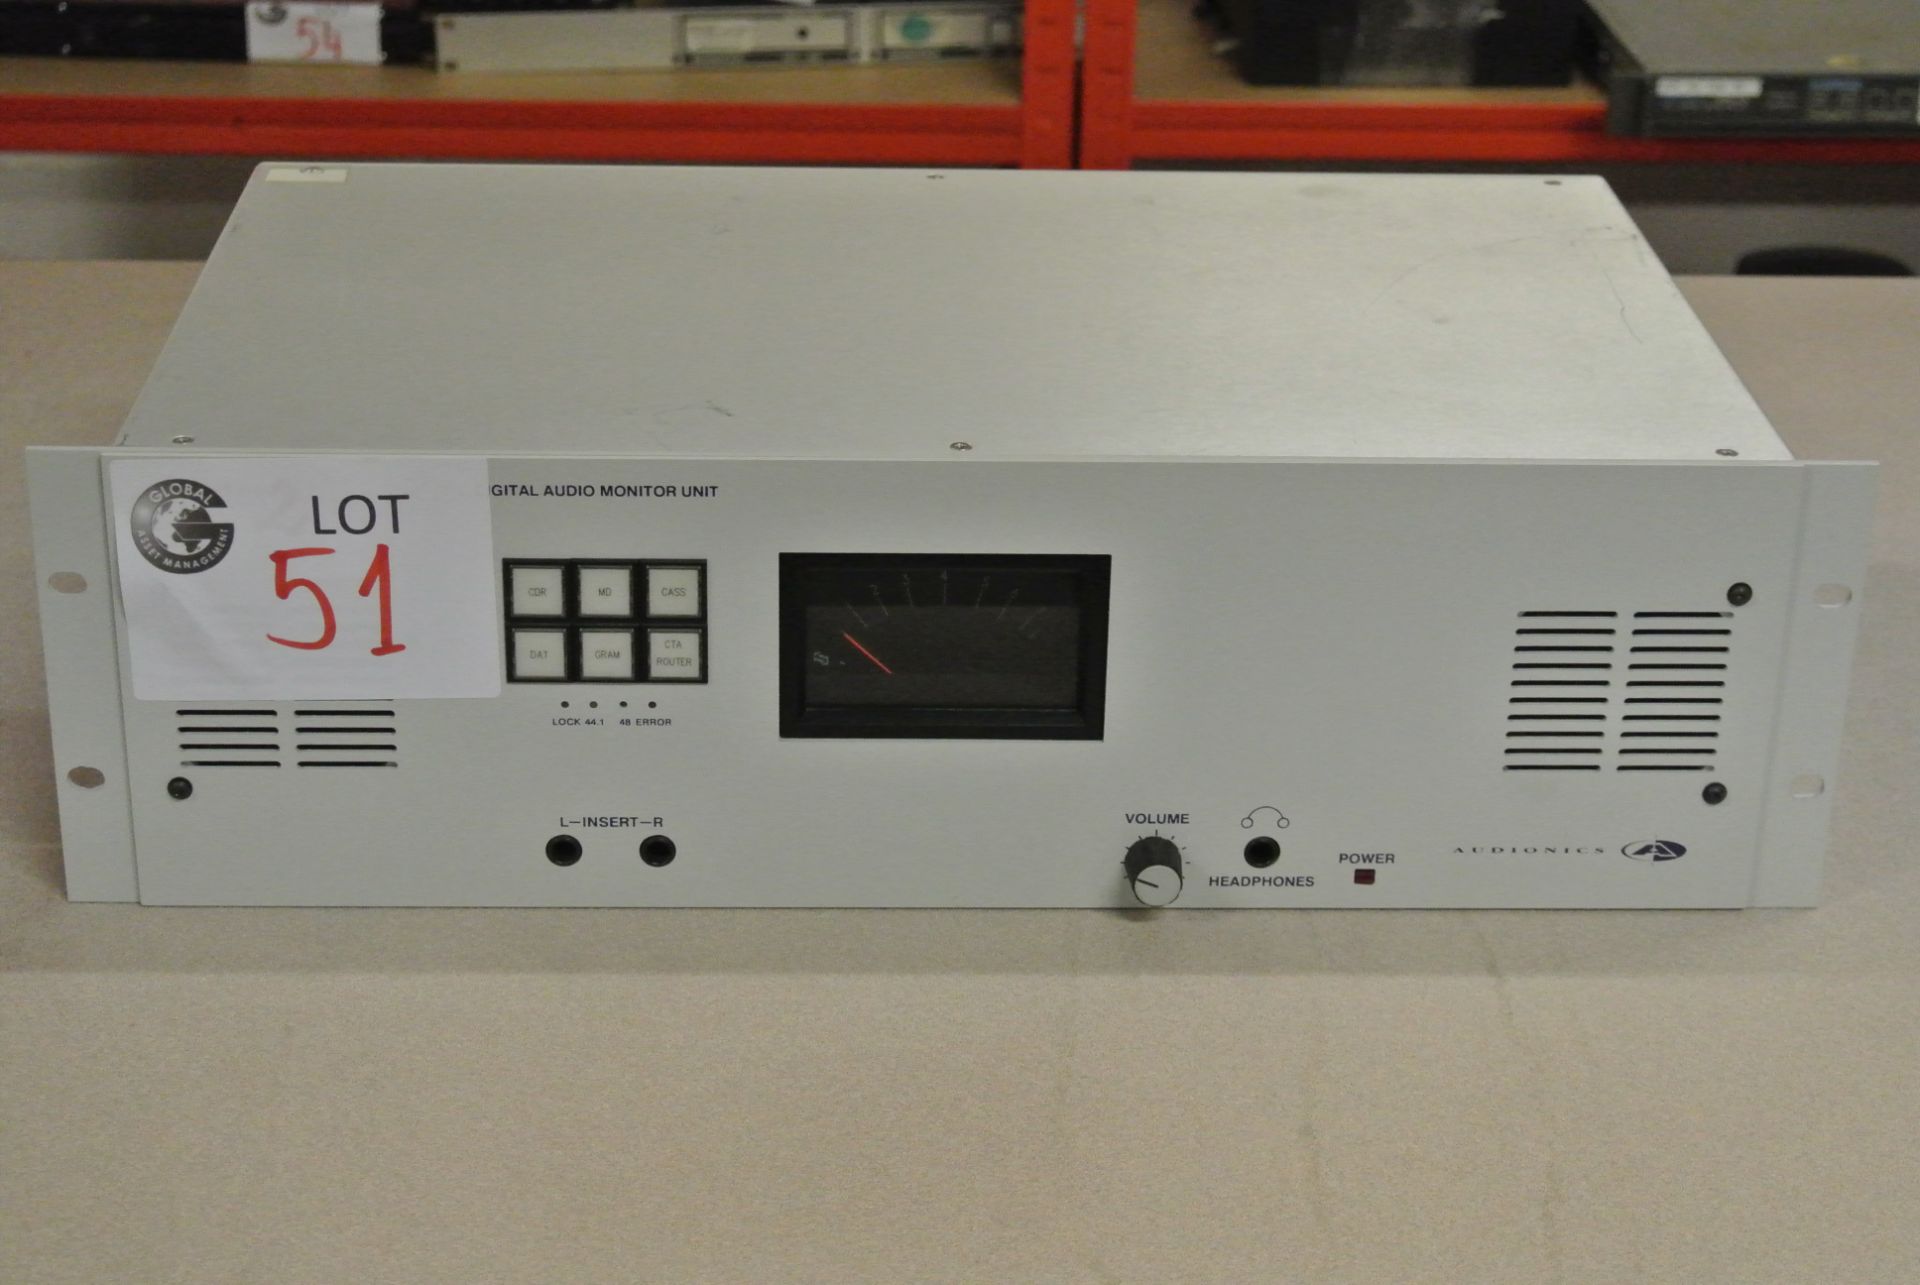 AUDIONICS SC1-D Digital Audio Monitoring Unit - 2U 19' Rack Mount